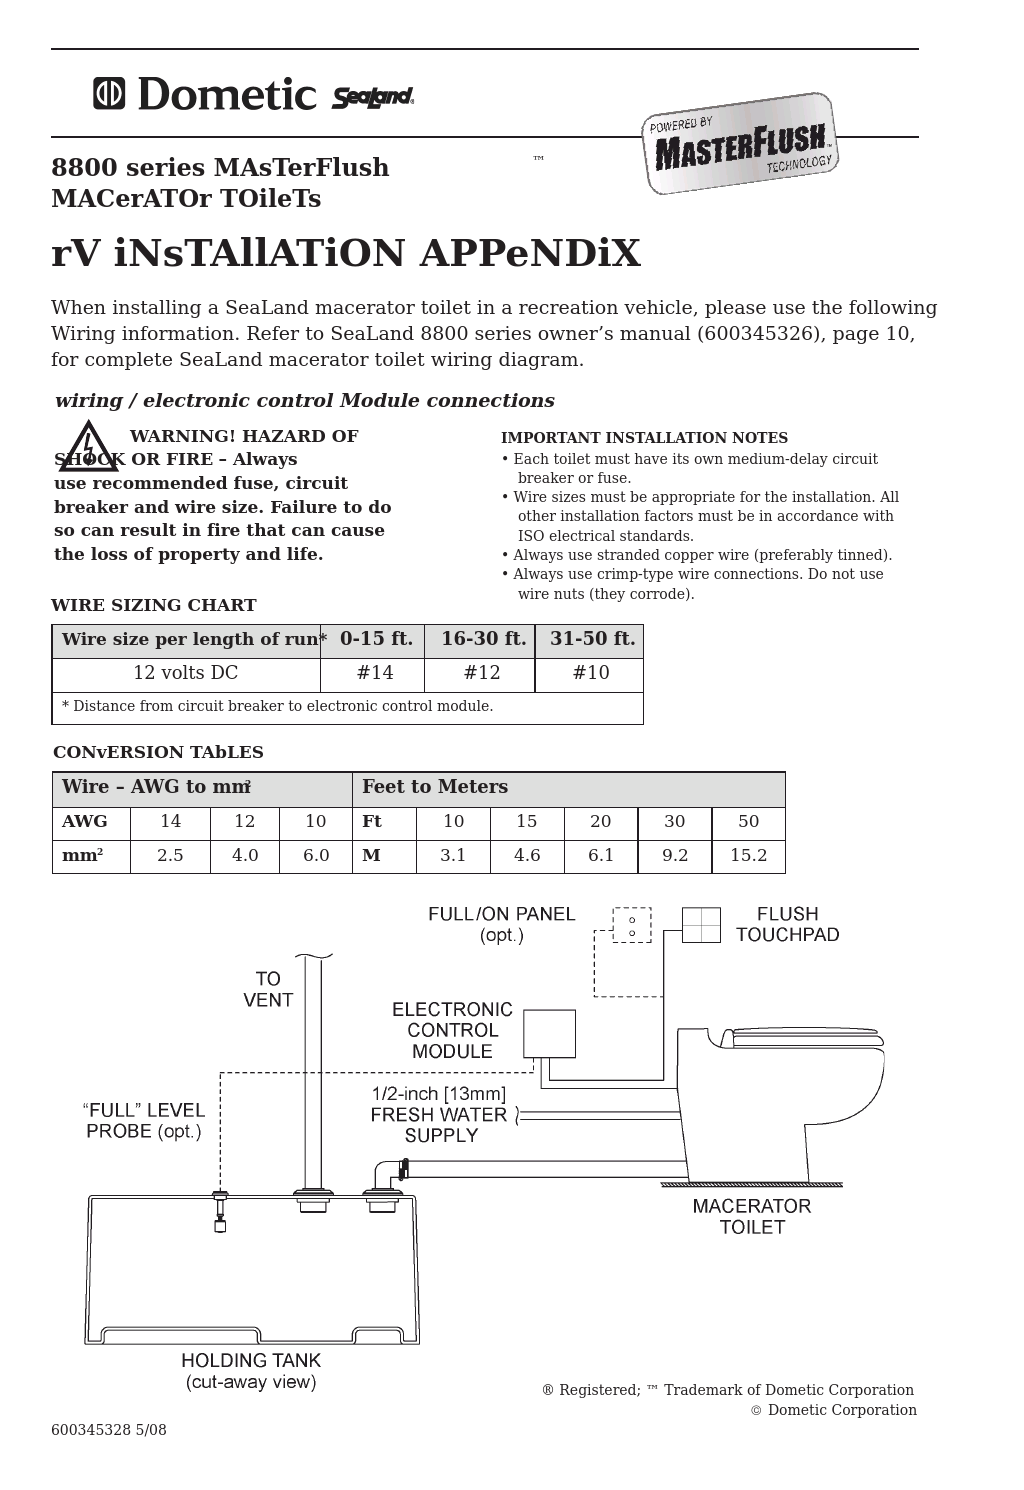 8800 Series MasterFlush - RV Installation Appendix